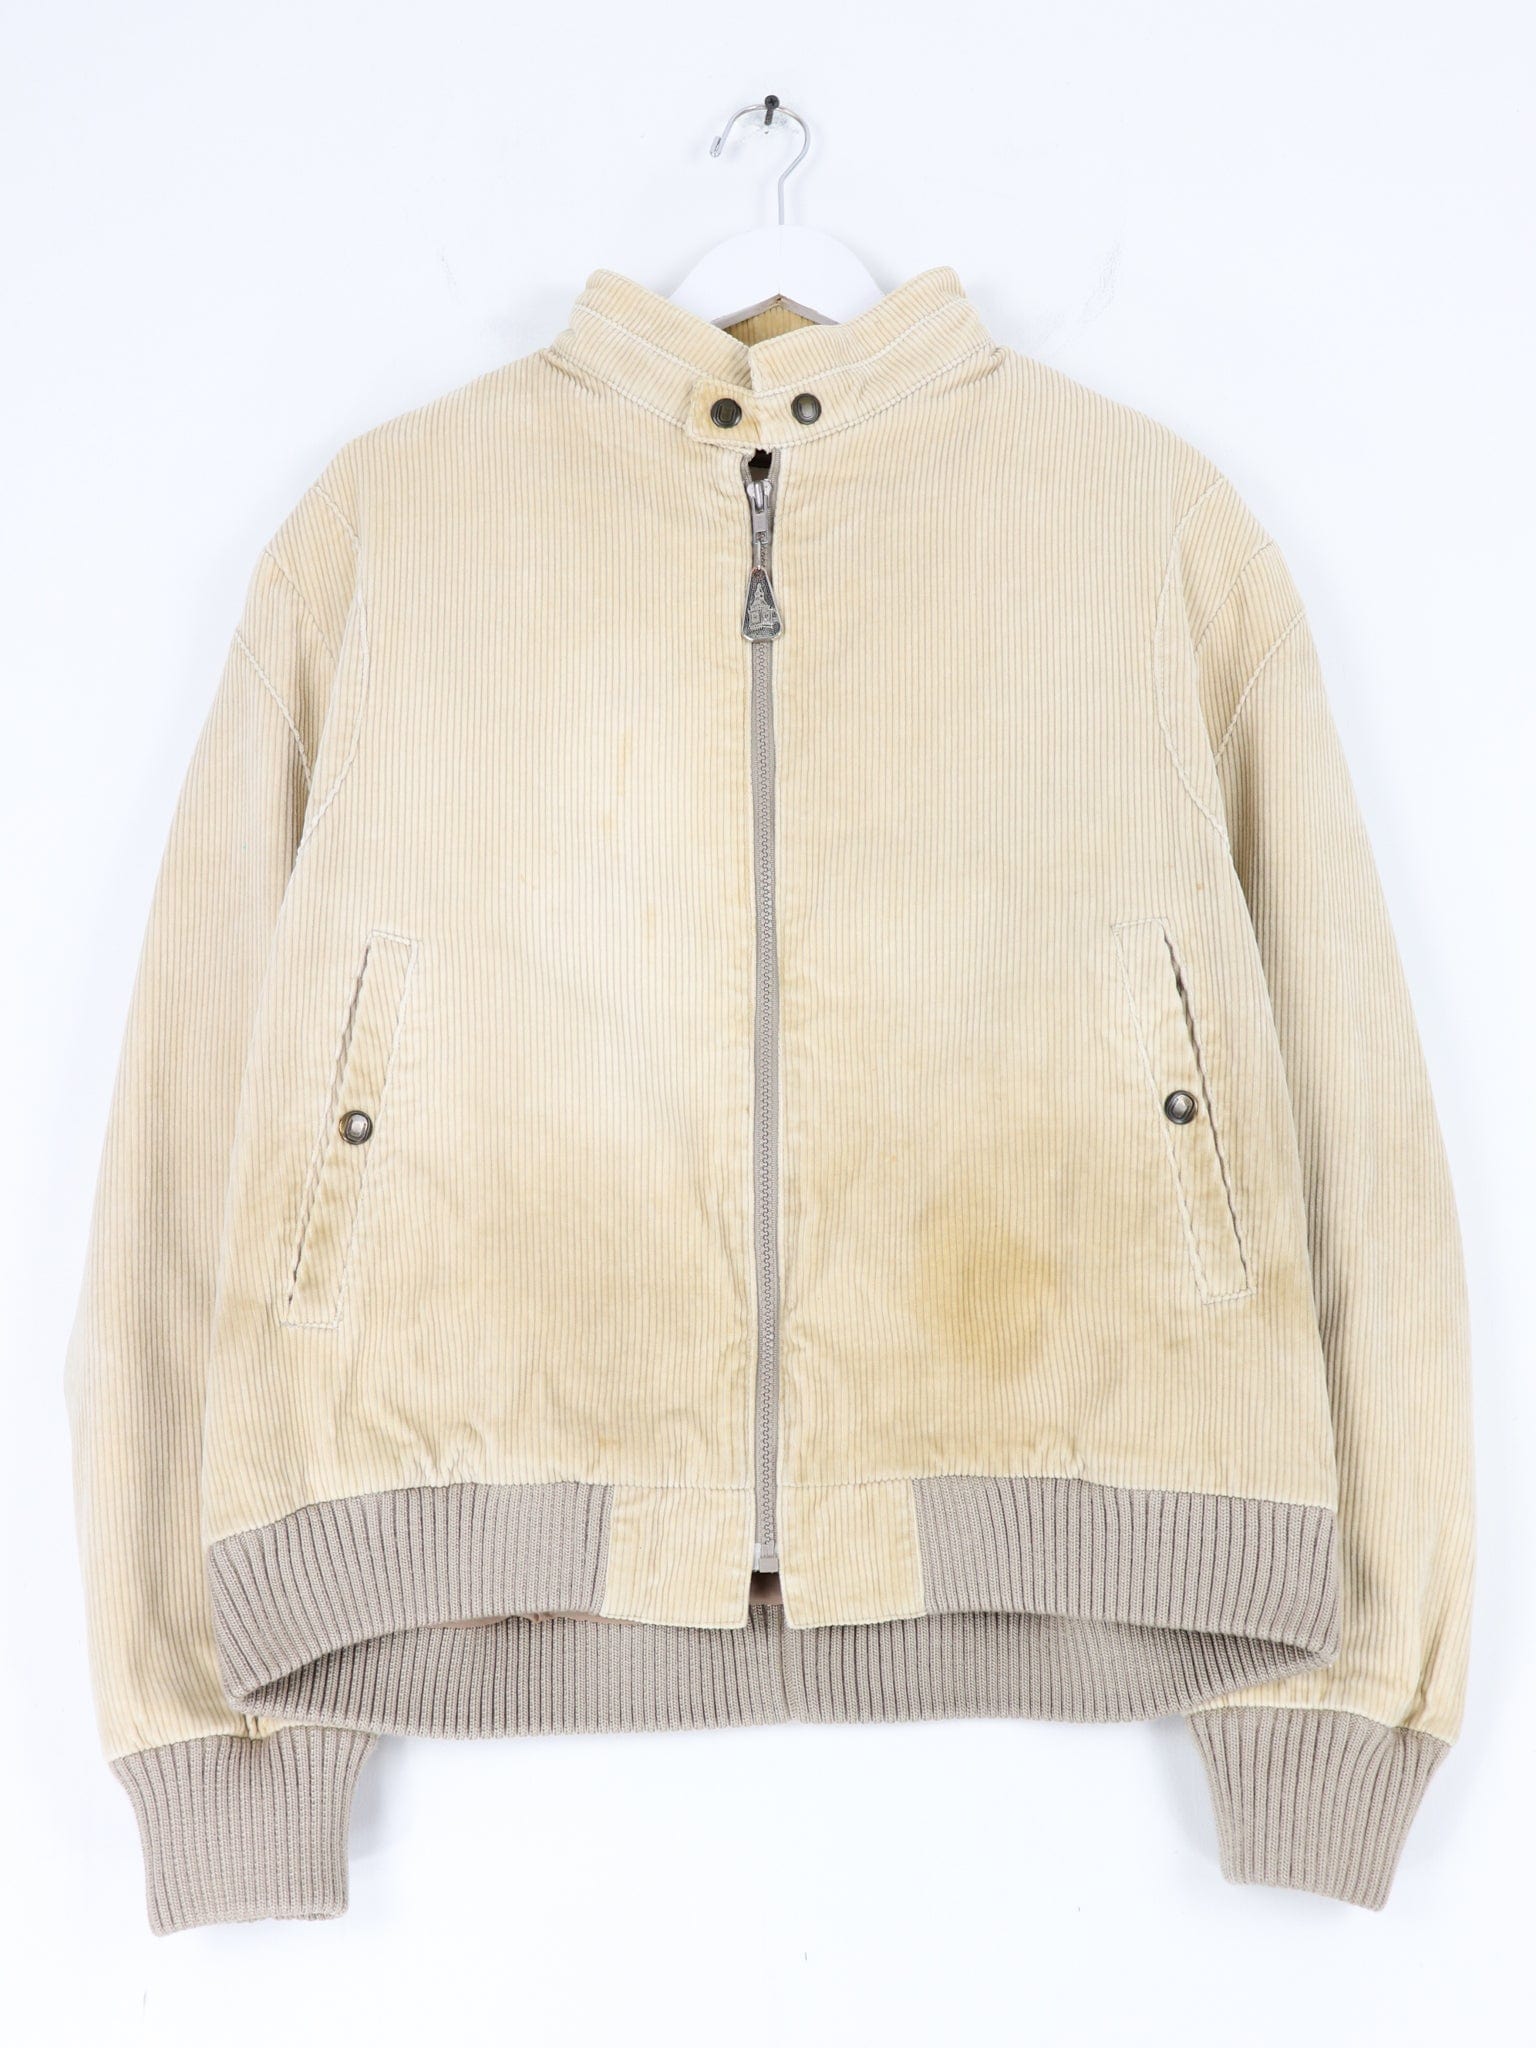 Vintage London Fog Corduroy Jacket Size 44 fits Small – Proper Vintage